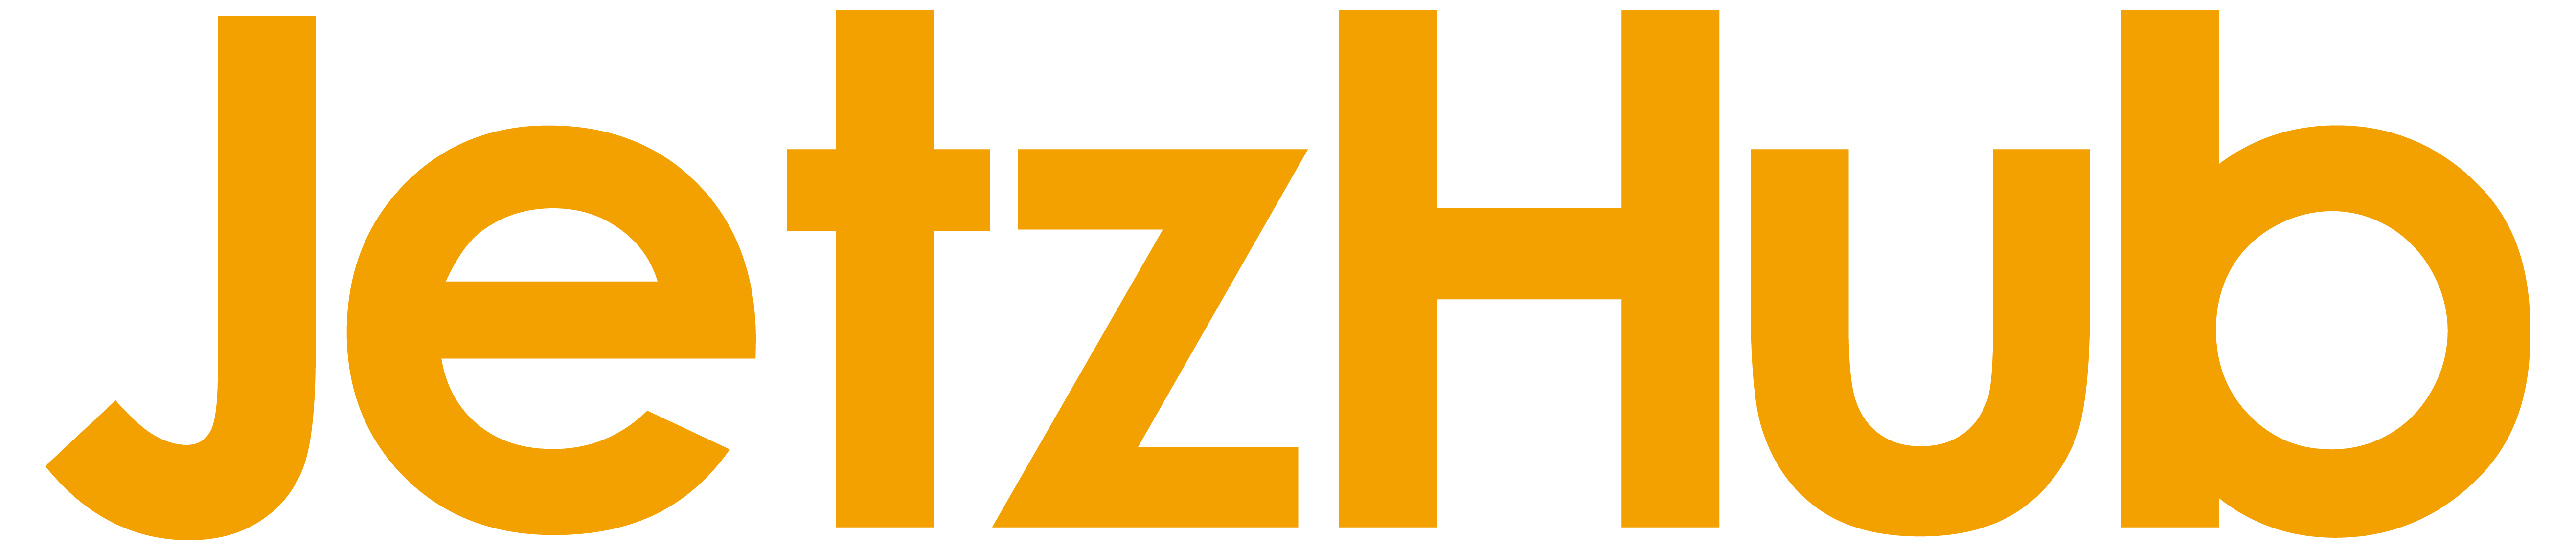 Jetz Hub